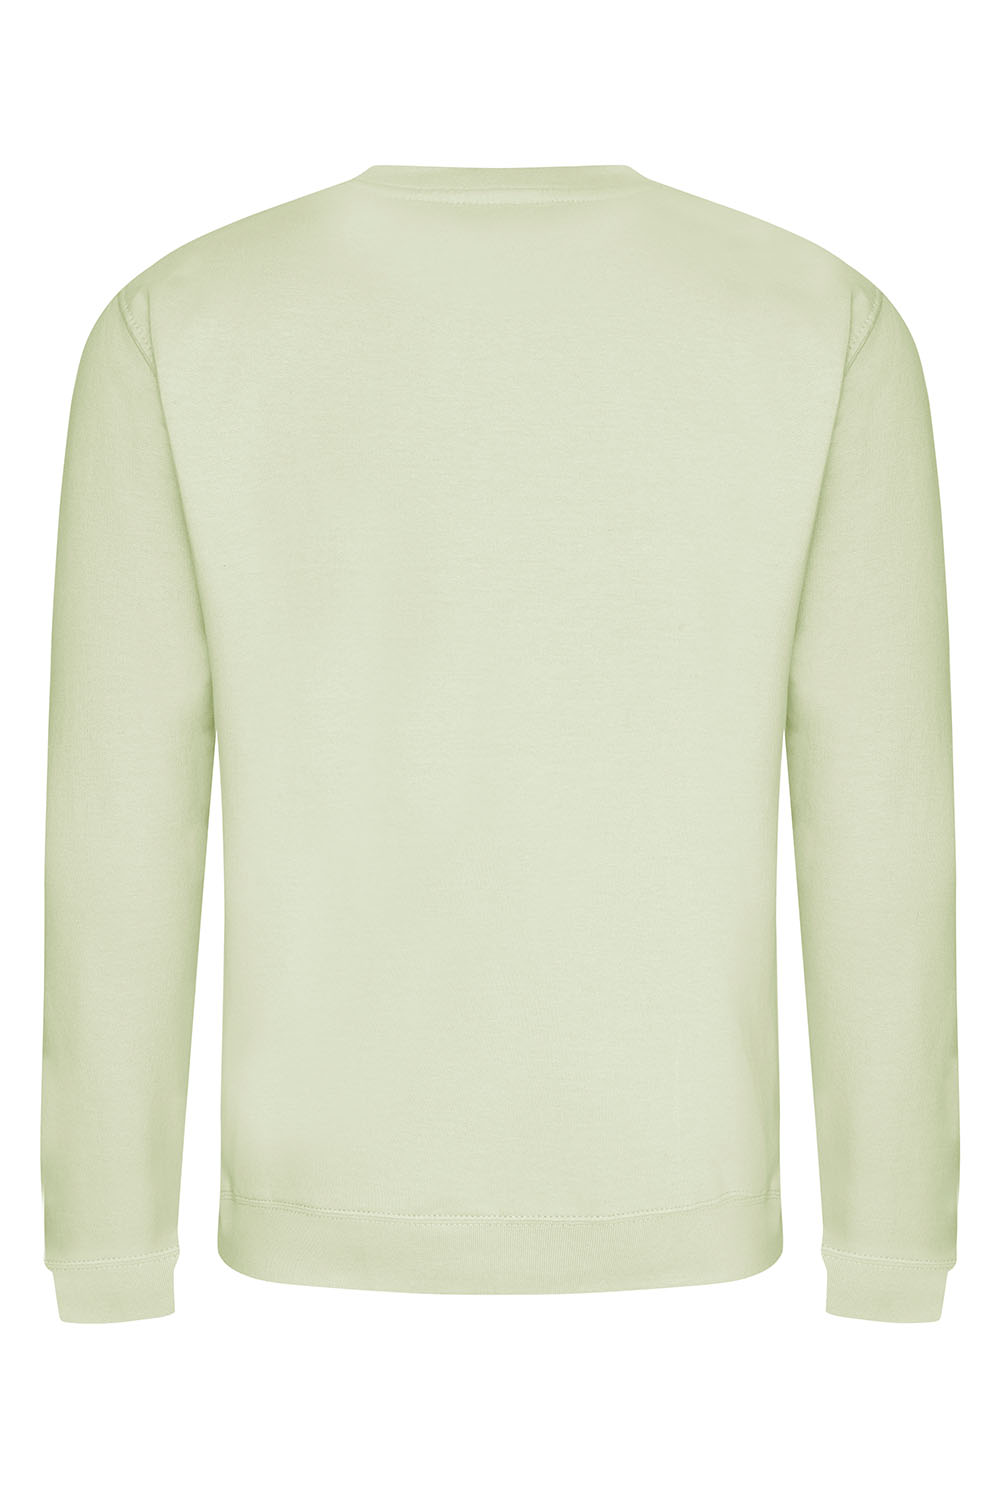 Plain Sweatshirt In Pistachio Green (Single).